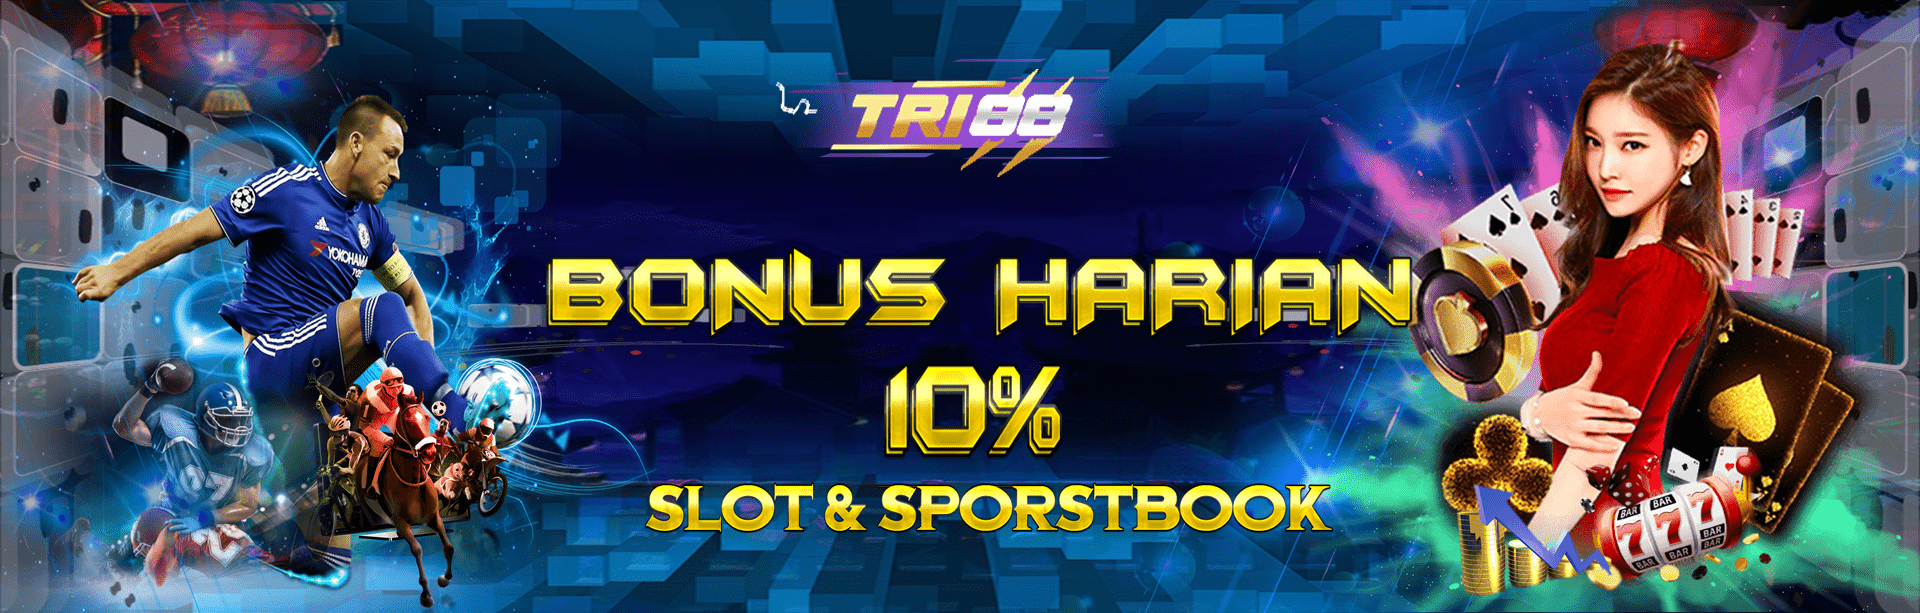 Bonus Harian 10% slot & Sbobet